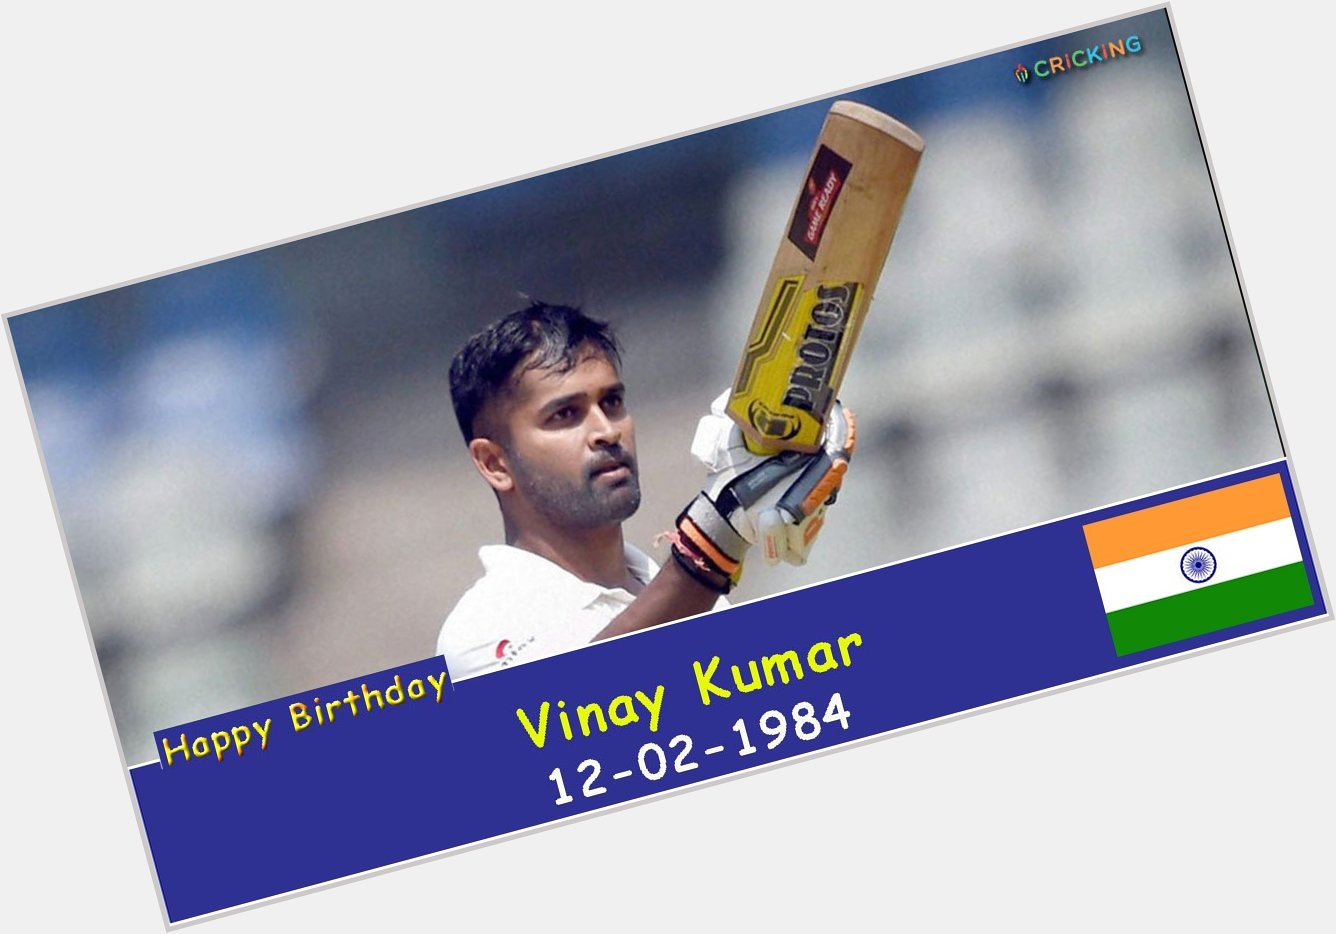 Happy Birthday Vinay Kumar. The Indian cricketer turns 33 today. 